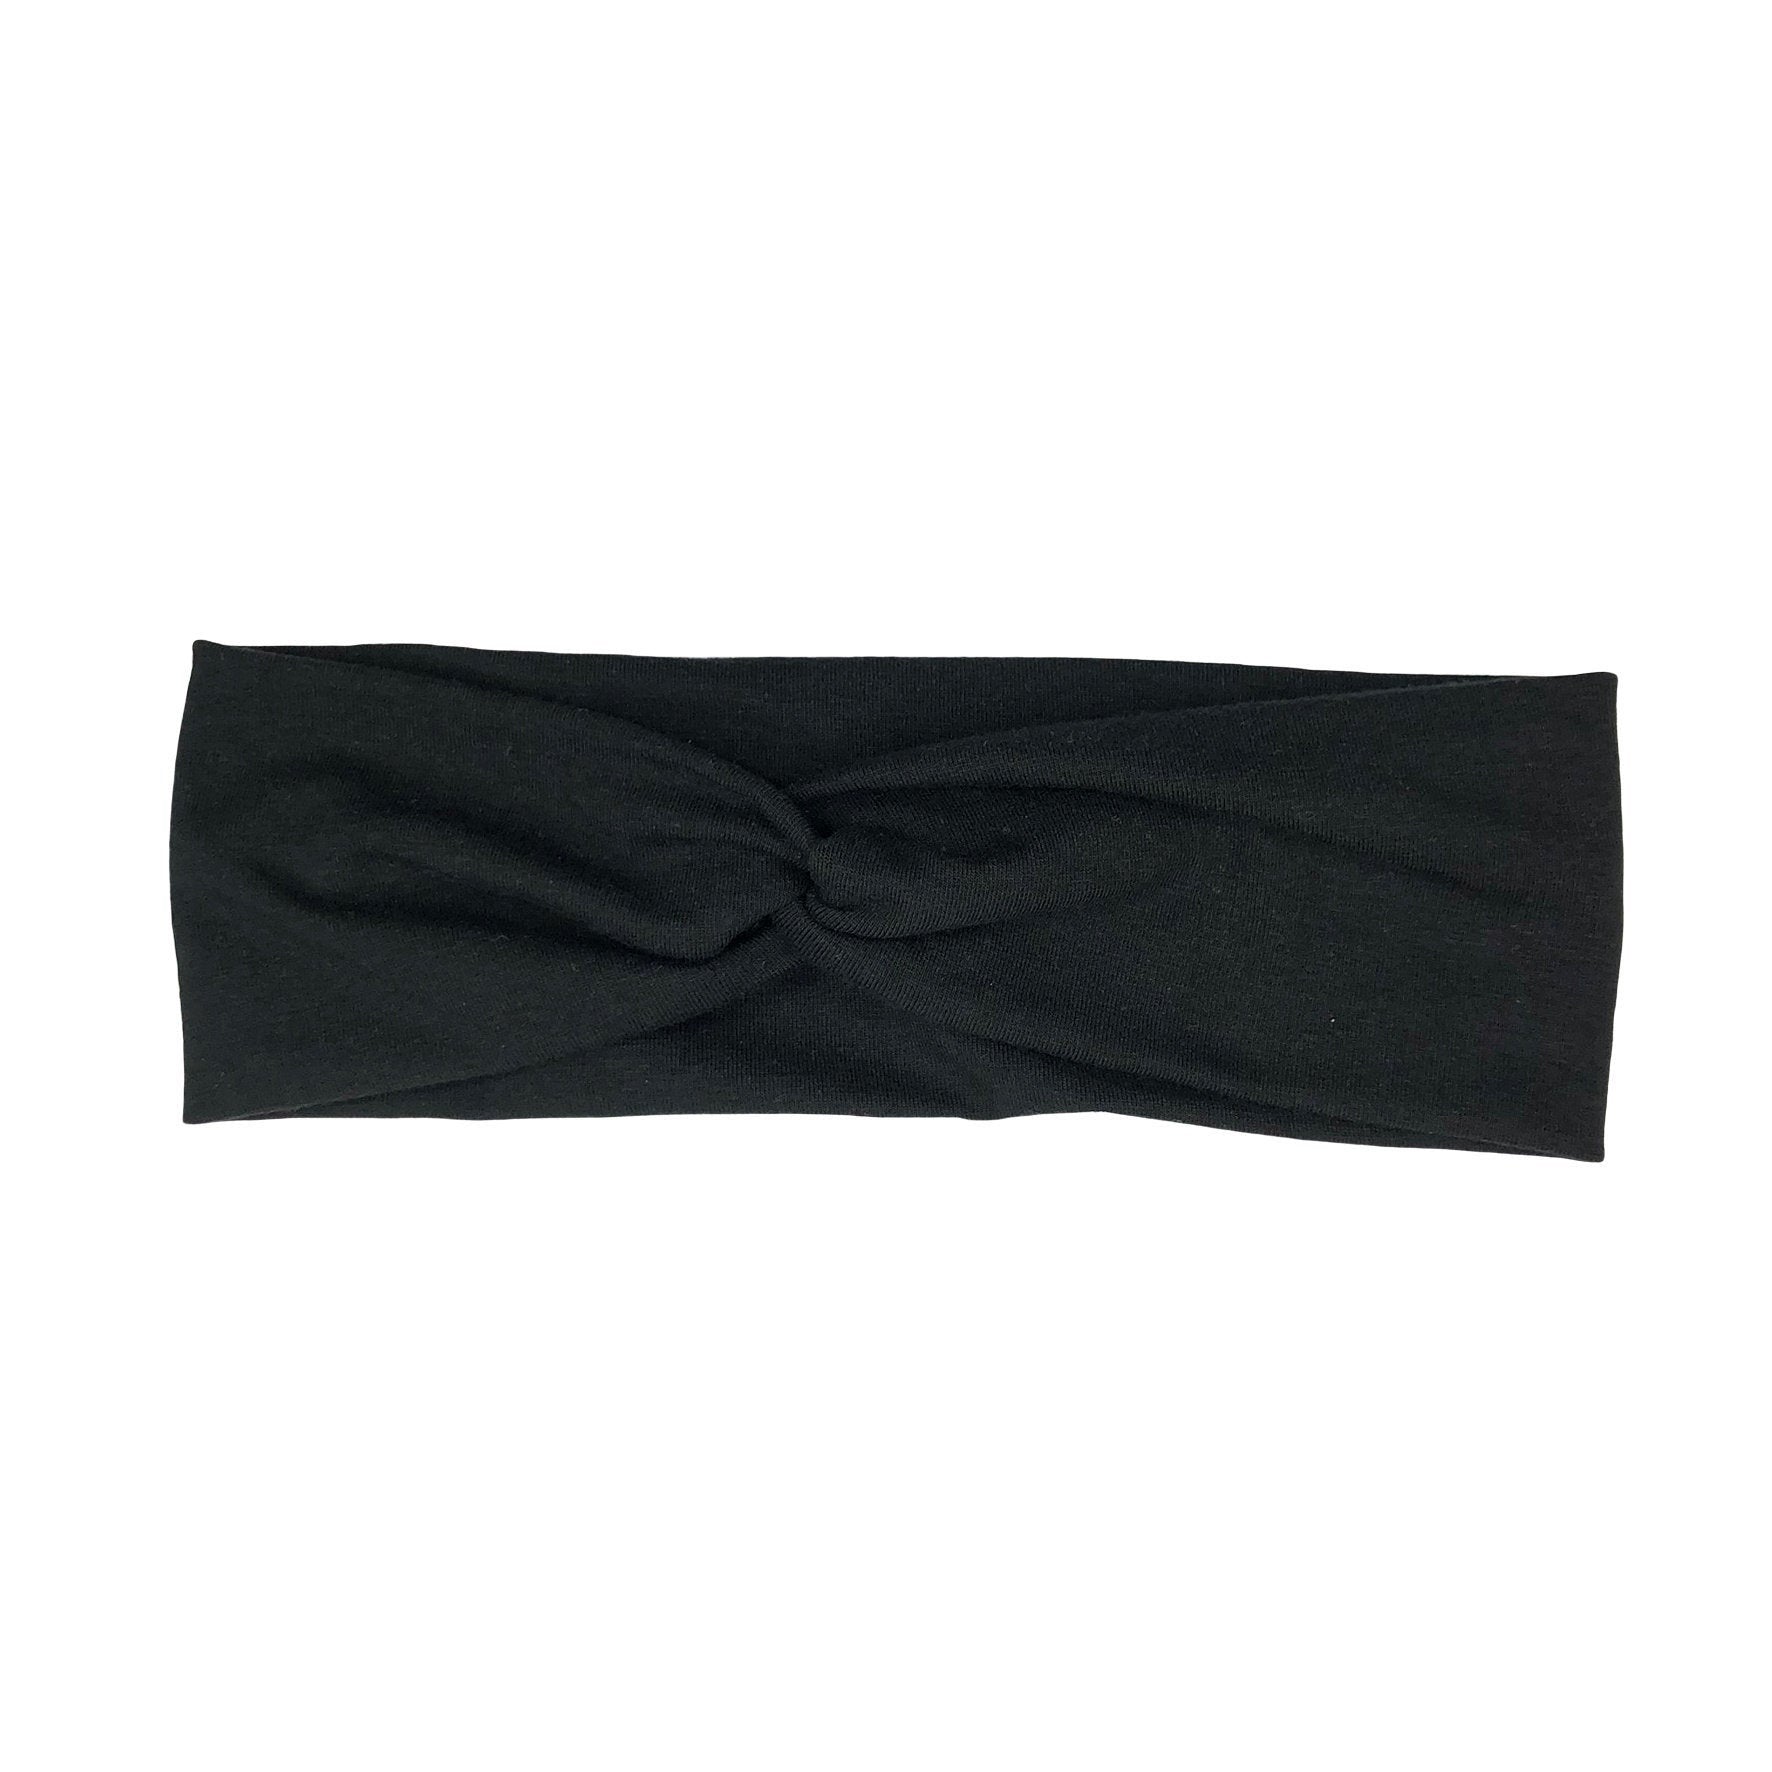 Solid Black Headband, Cotton Spandex